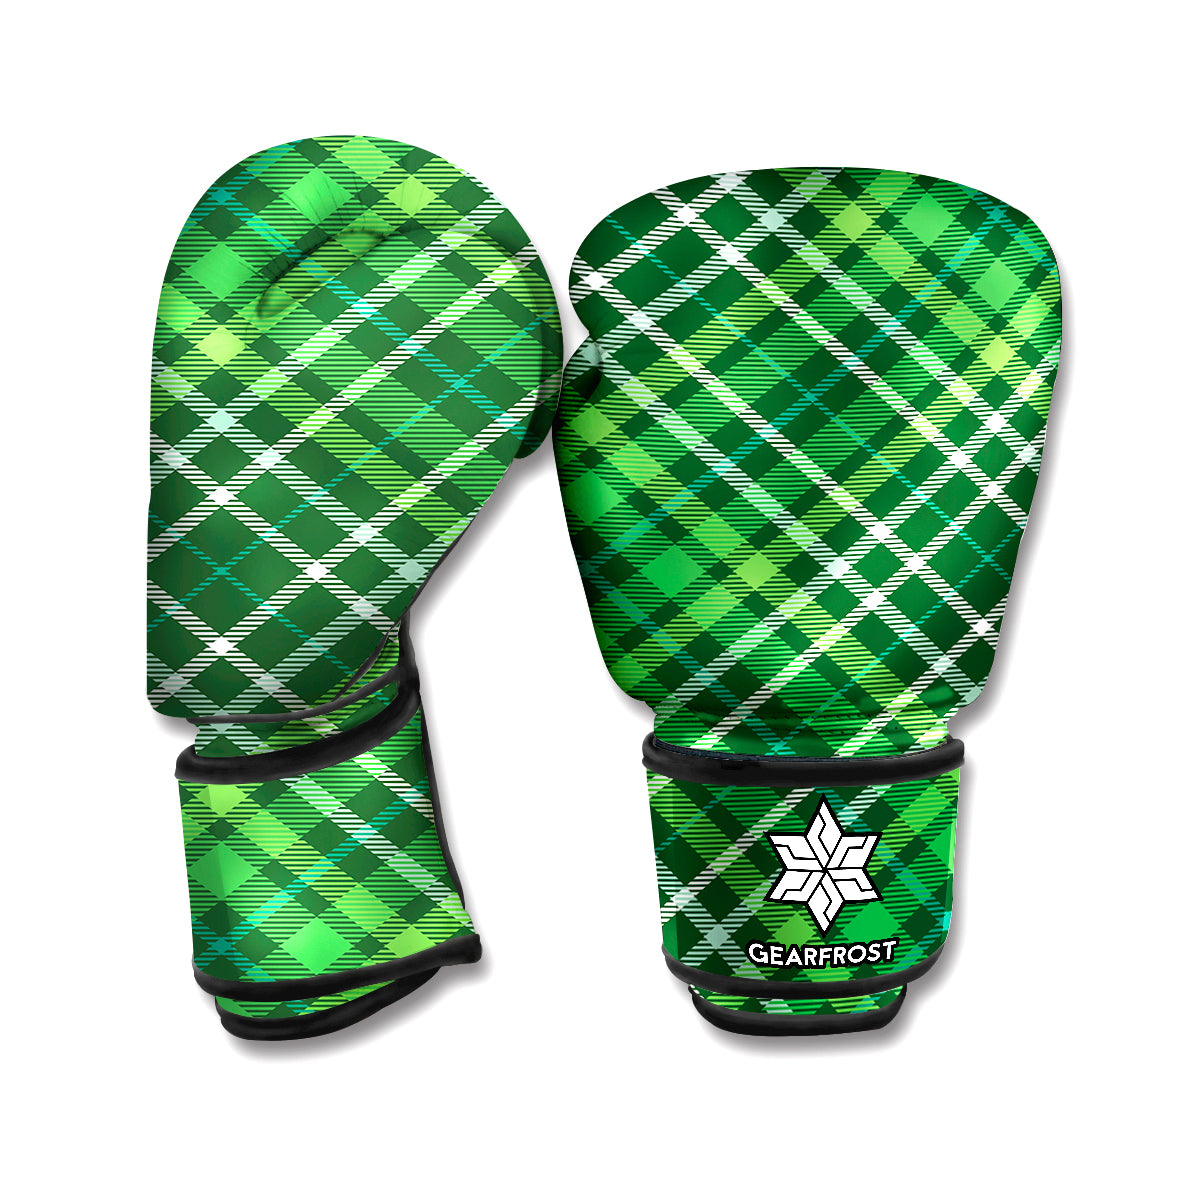 Irish Plaid Pattern Print Boxing Gloves